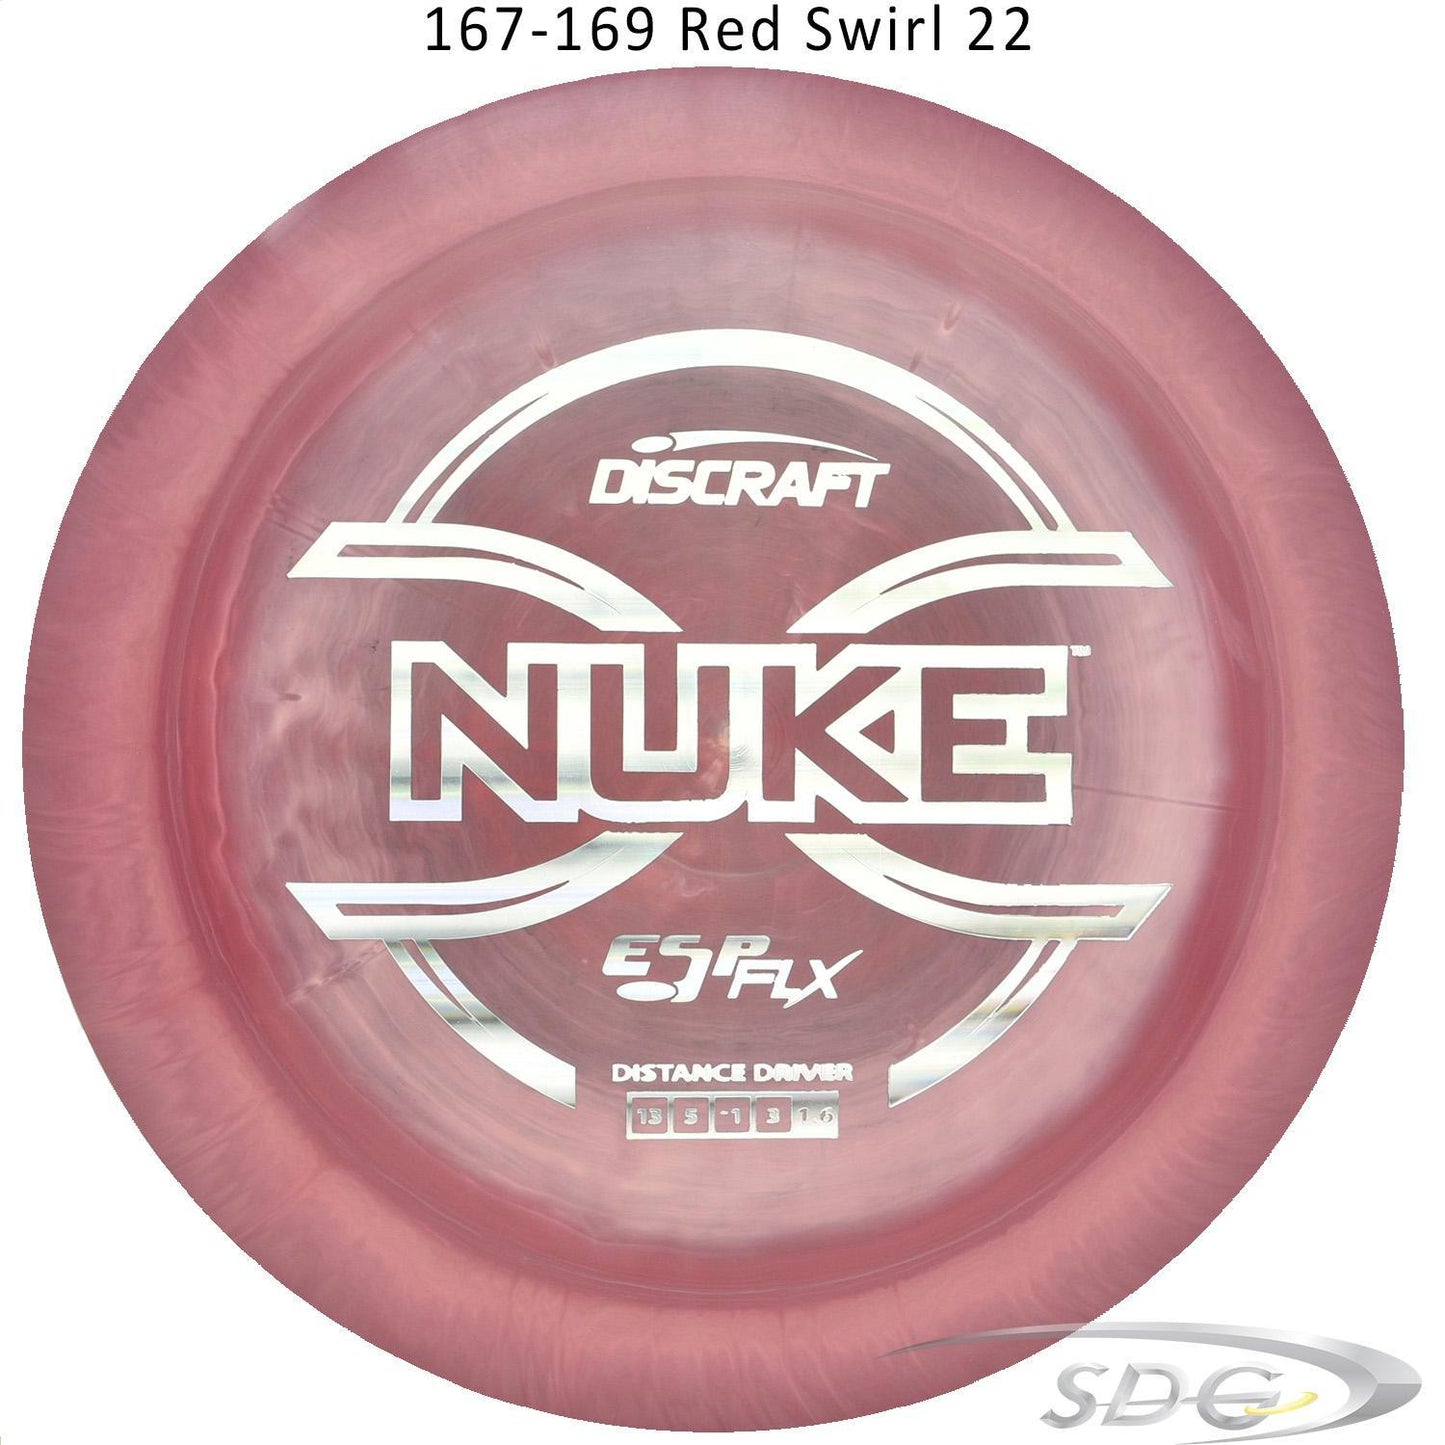 discraft-esp-flx-nuke-disc-golf-distance-driver 167-169 Red Swirl 22